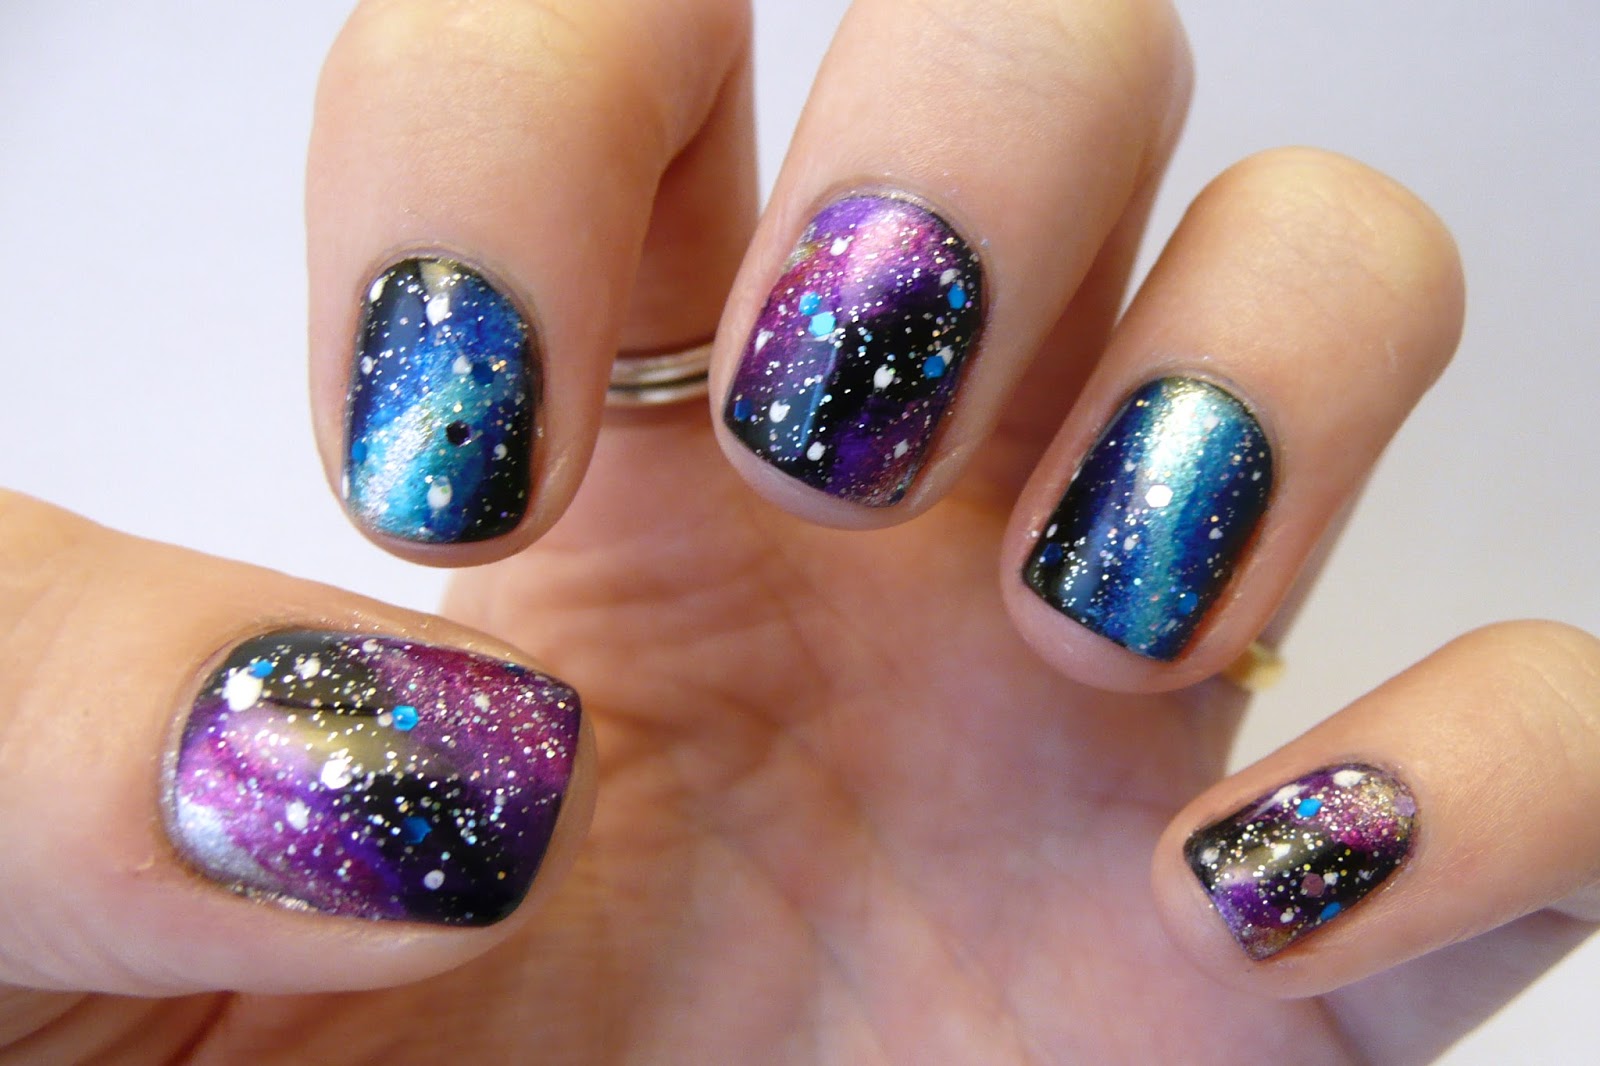 3. "42" galaxy nail art design - wide 9